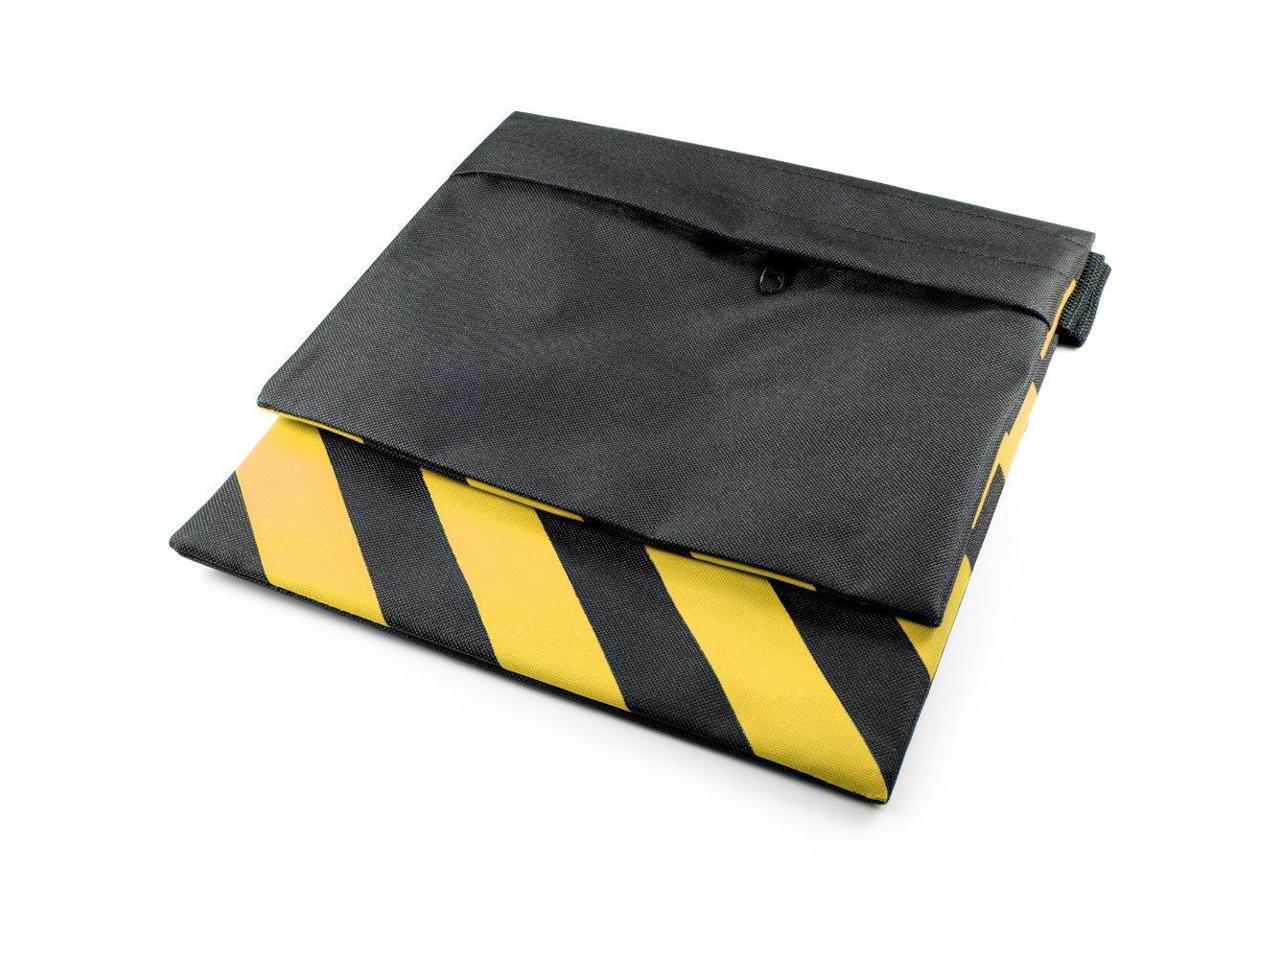 Neewer 2 Set Black/Yellow Photography Sand Bag for Boom Arms Light Stand Tripod 